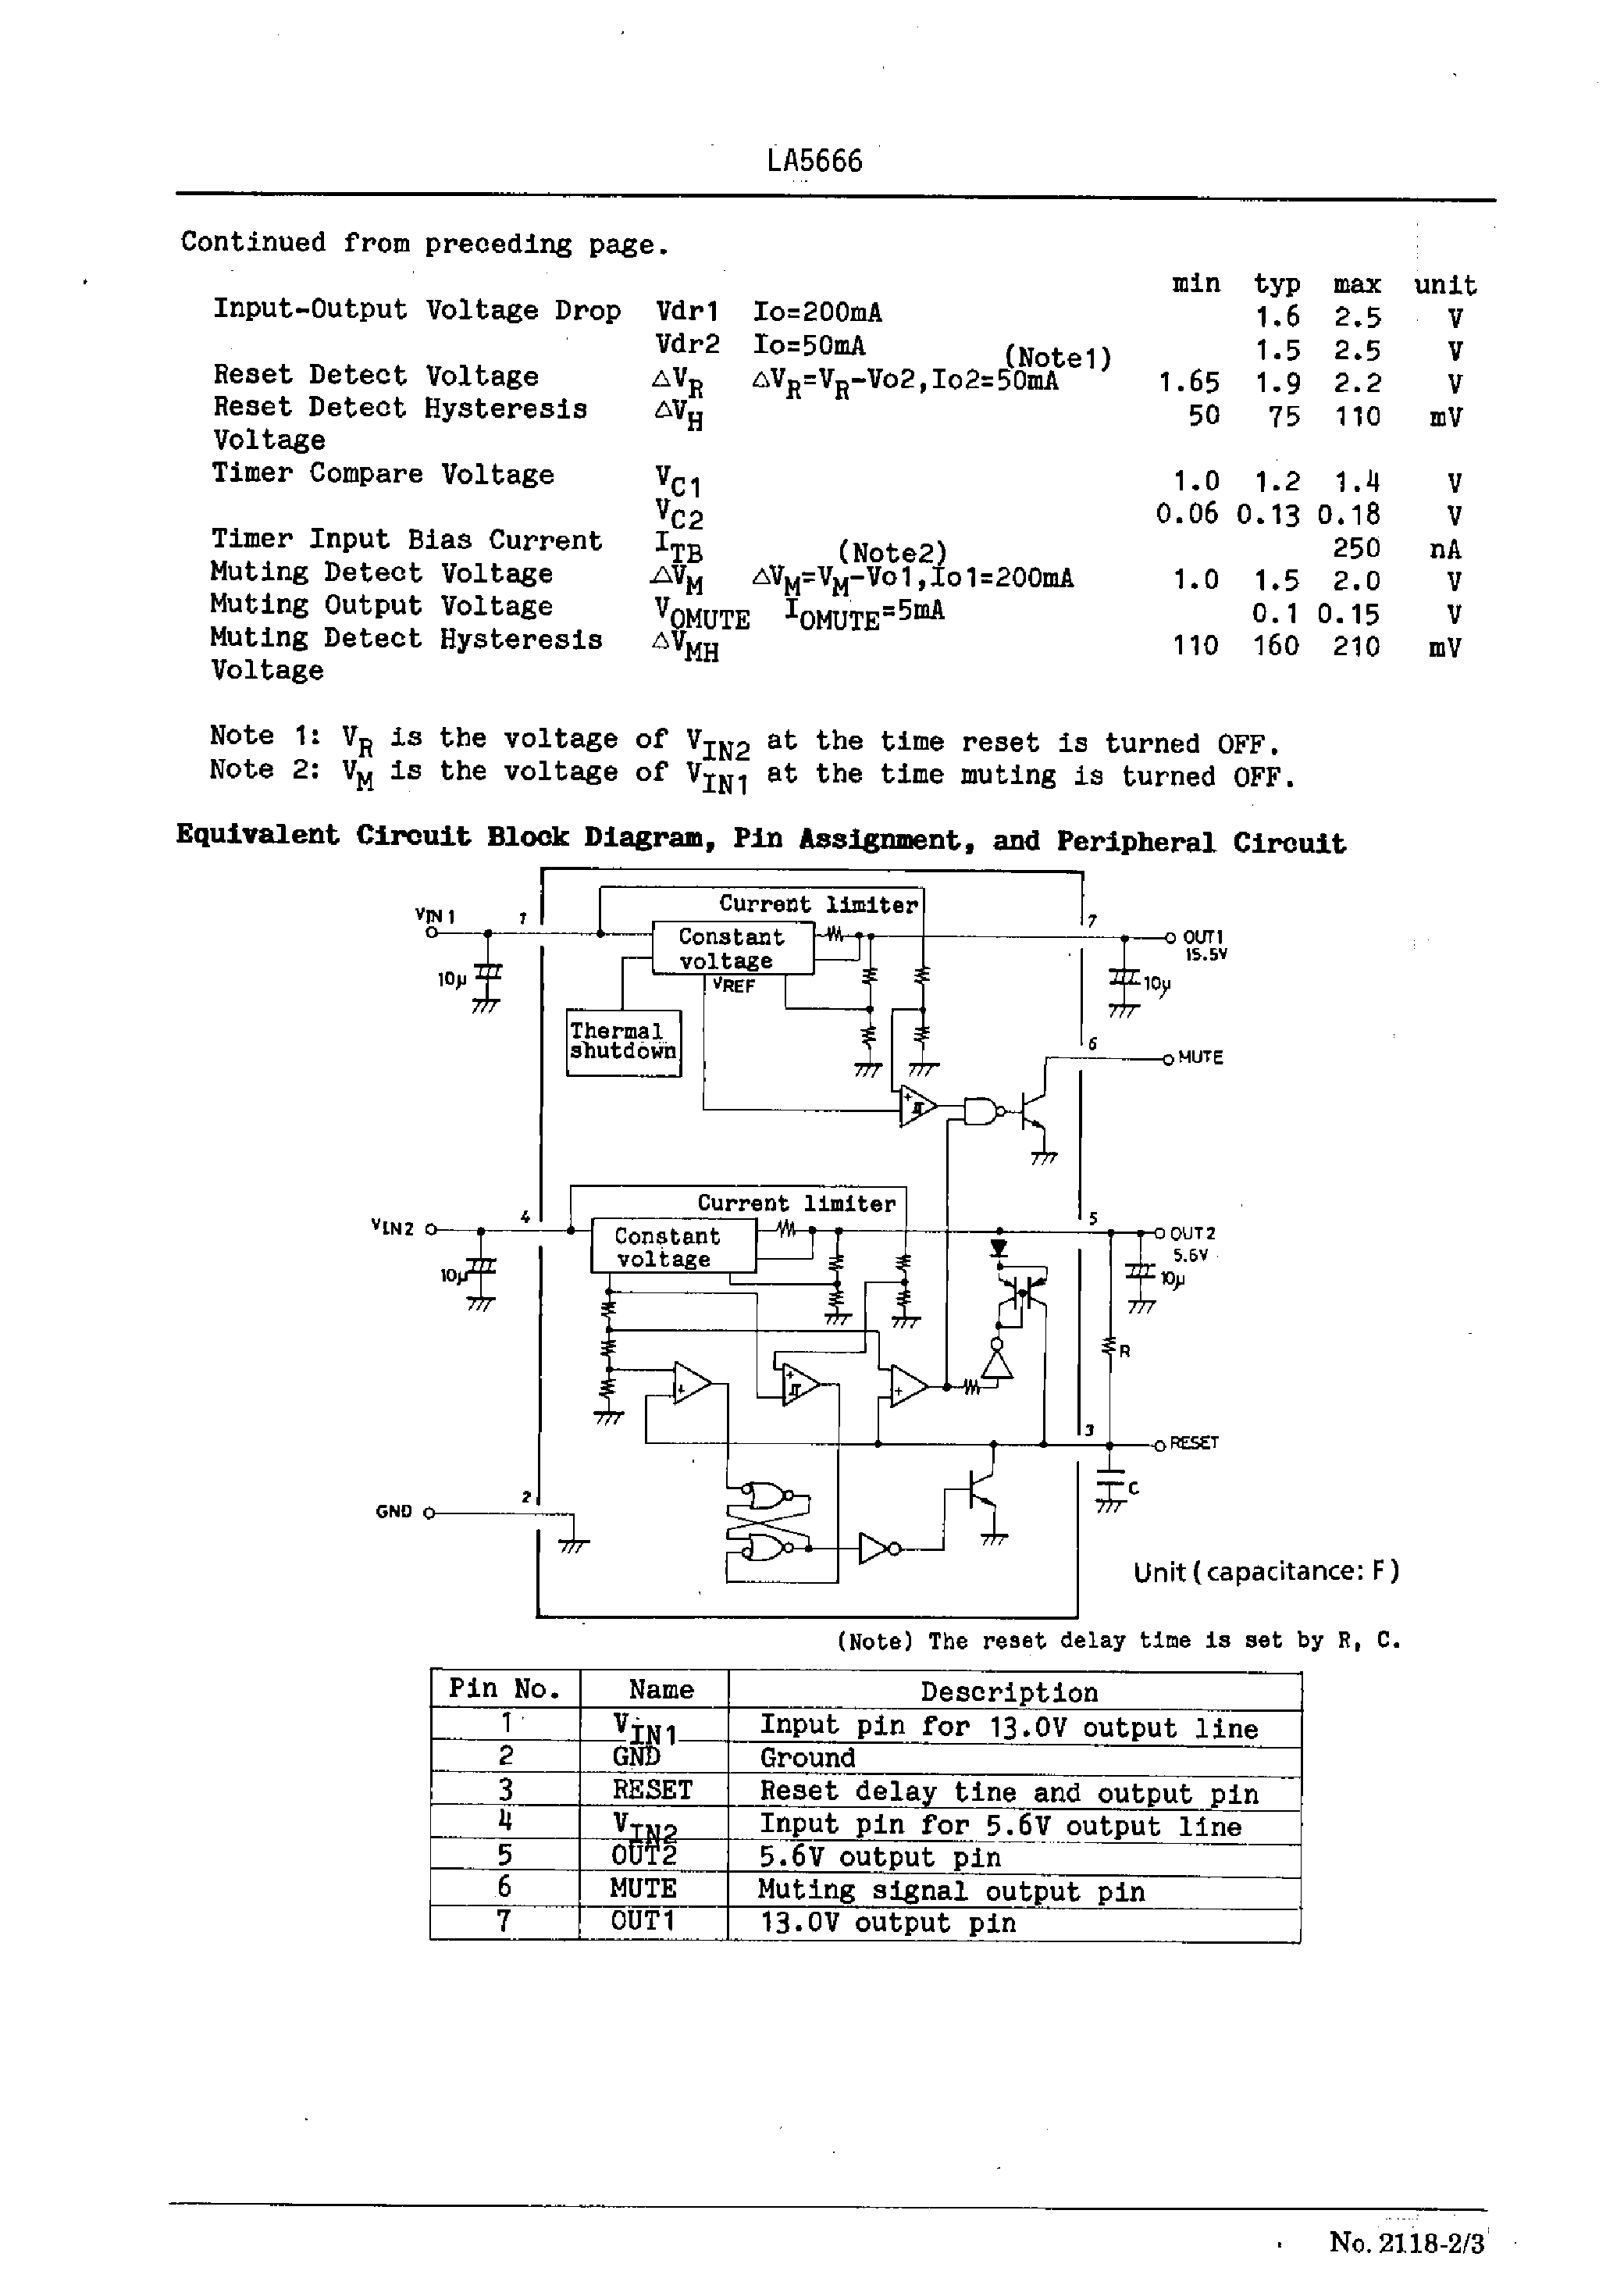 Datasheet LA5666 - Multifunction Multiple Voltage Regulator page 2